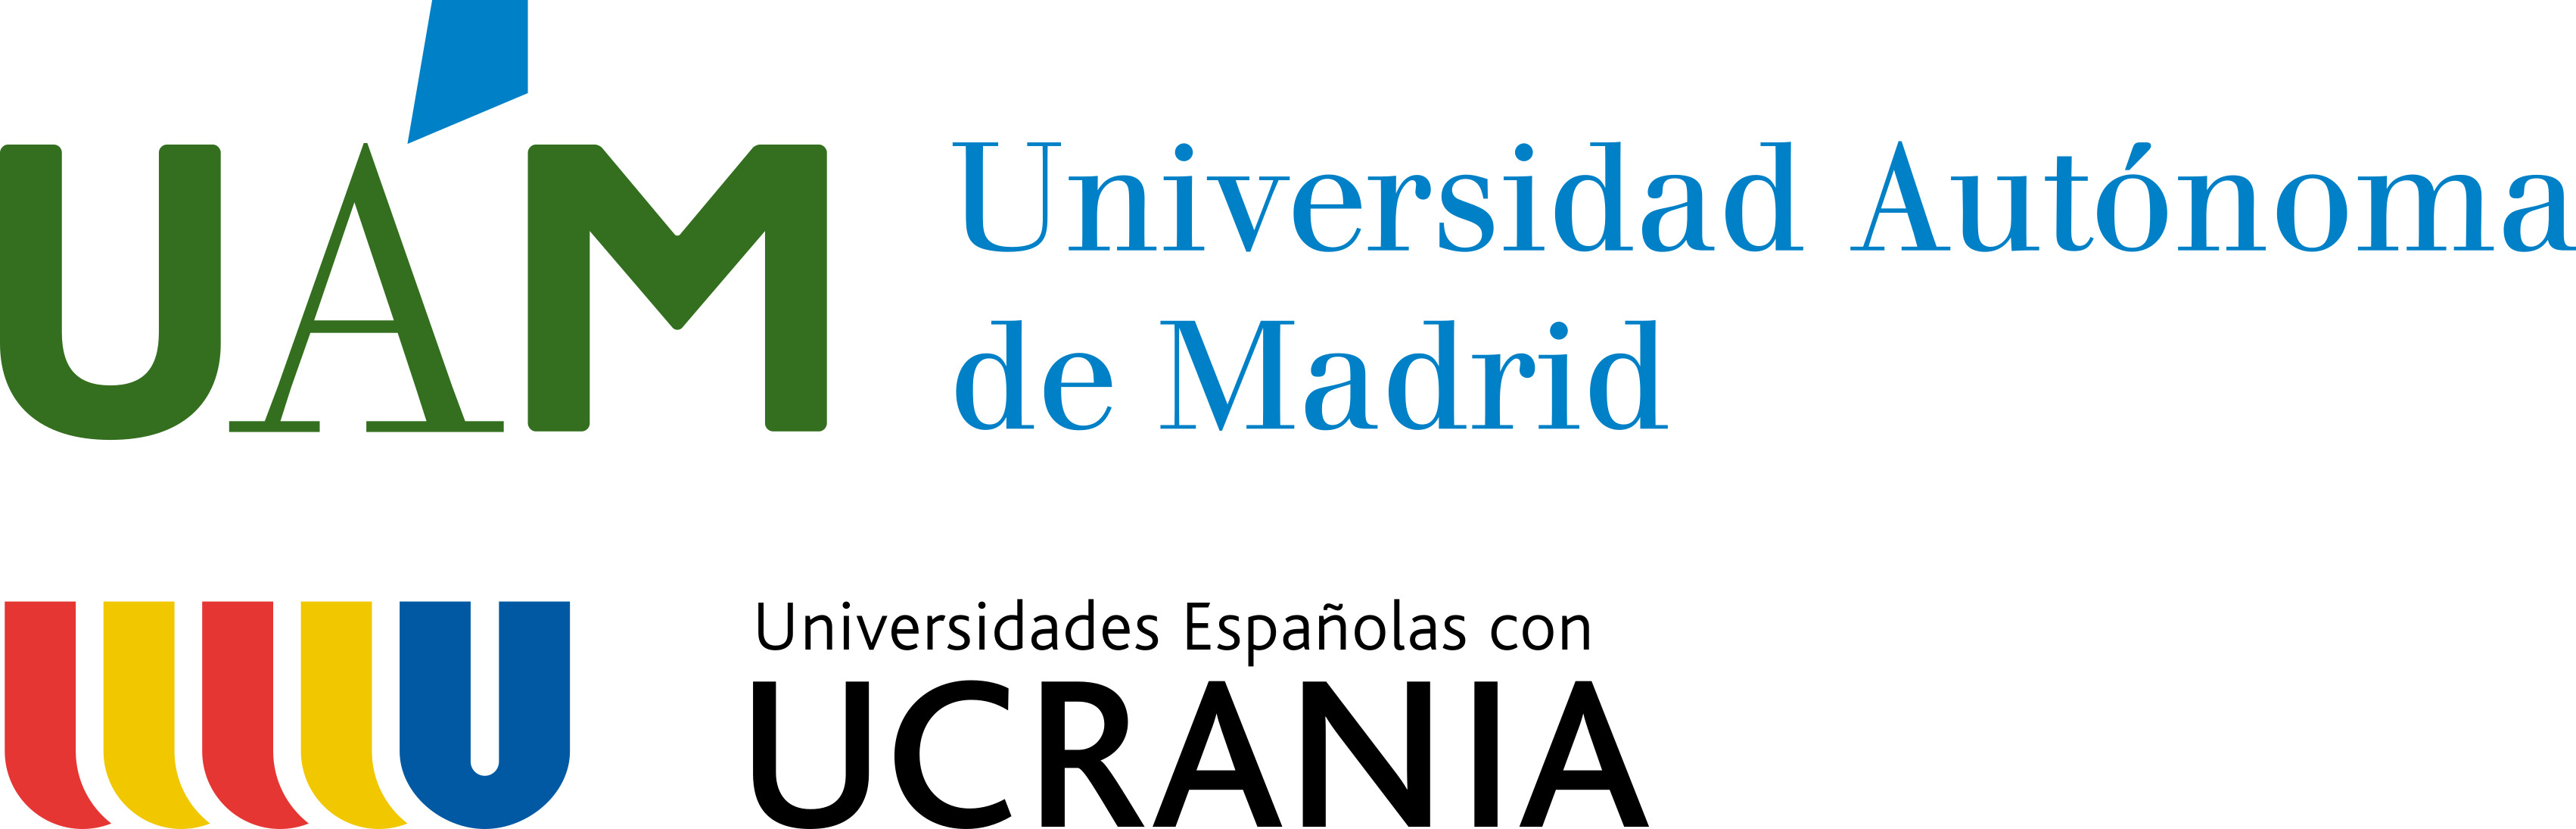 Logo de la universidad